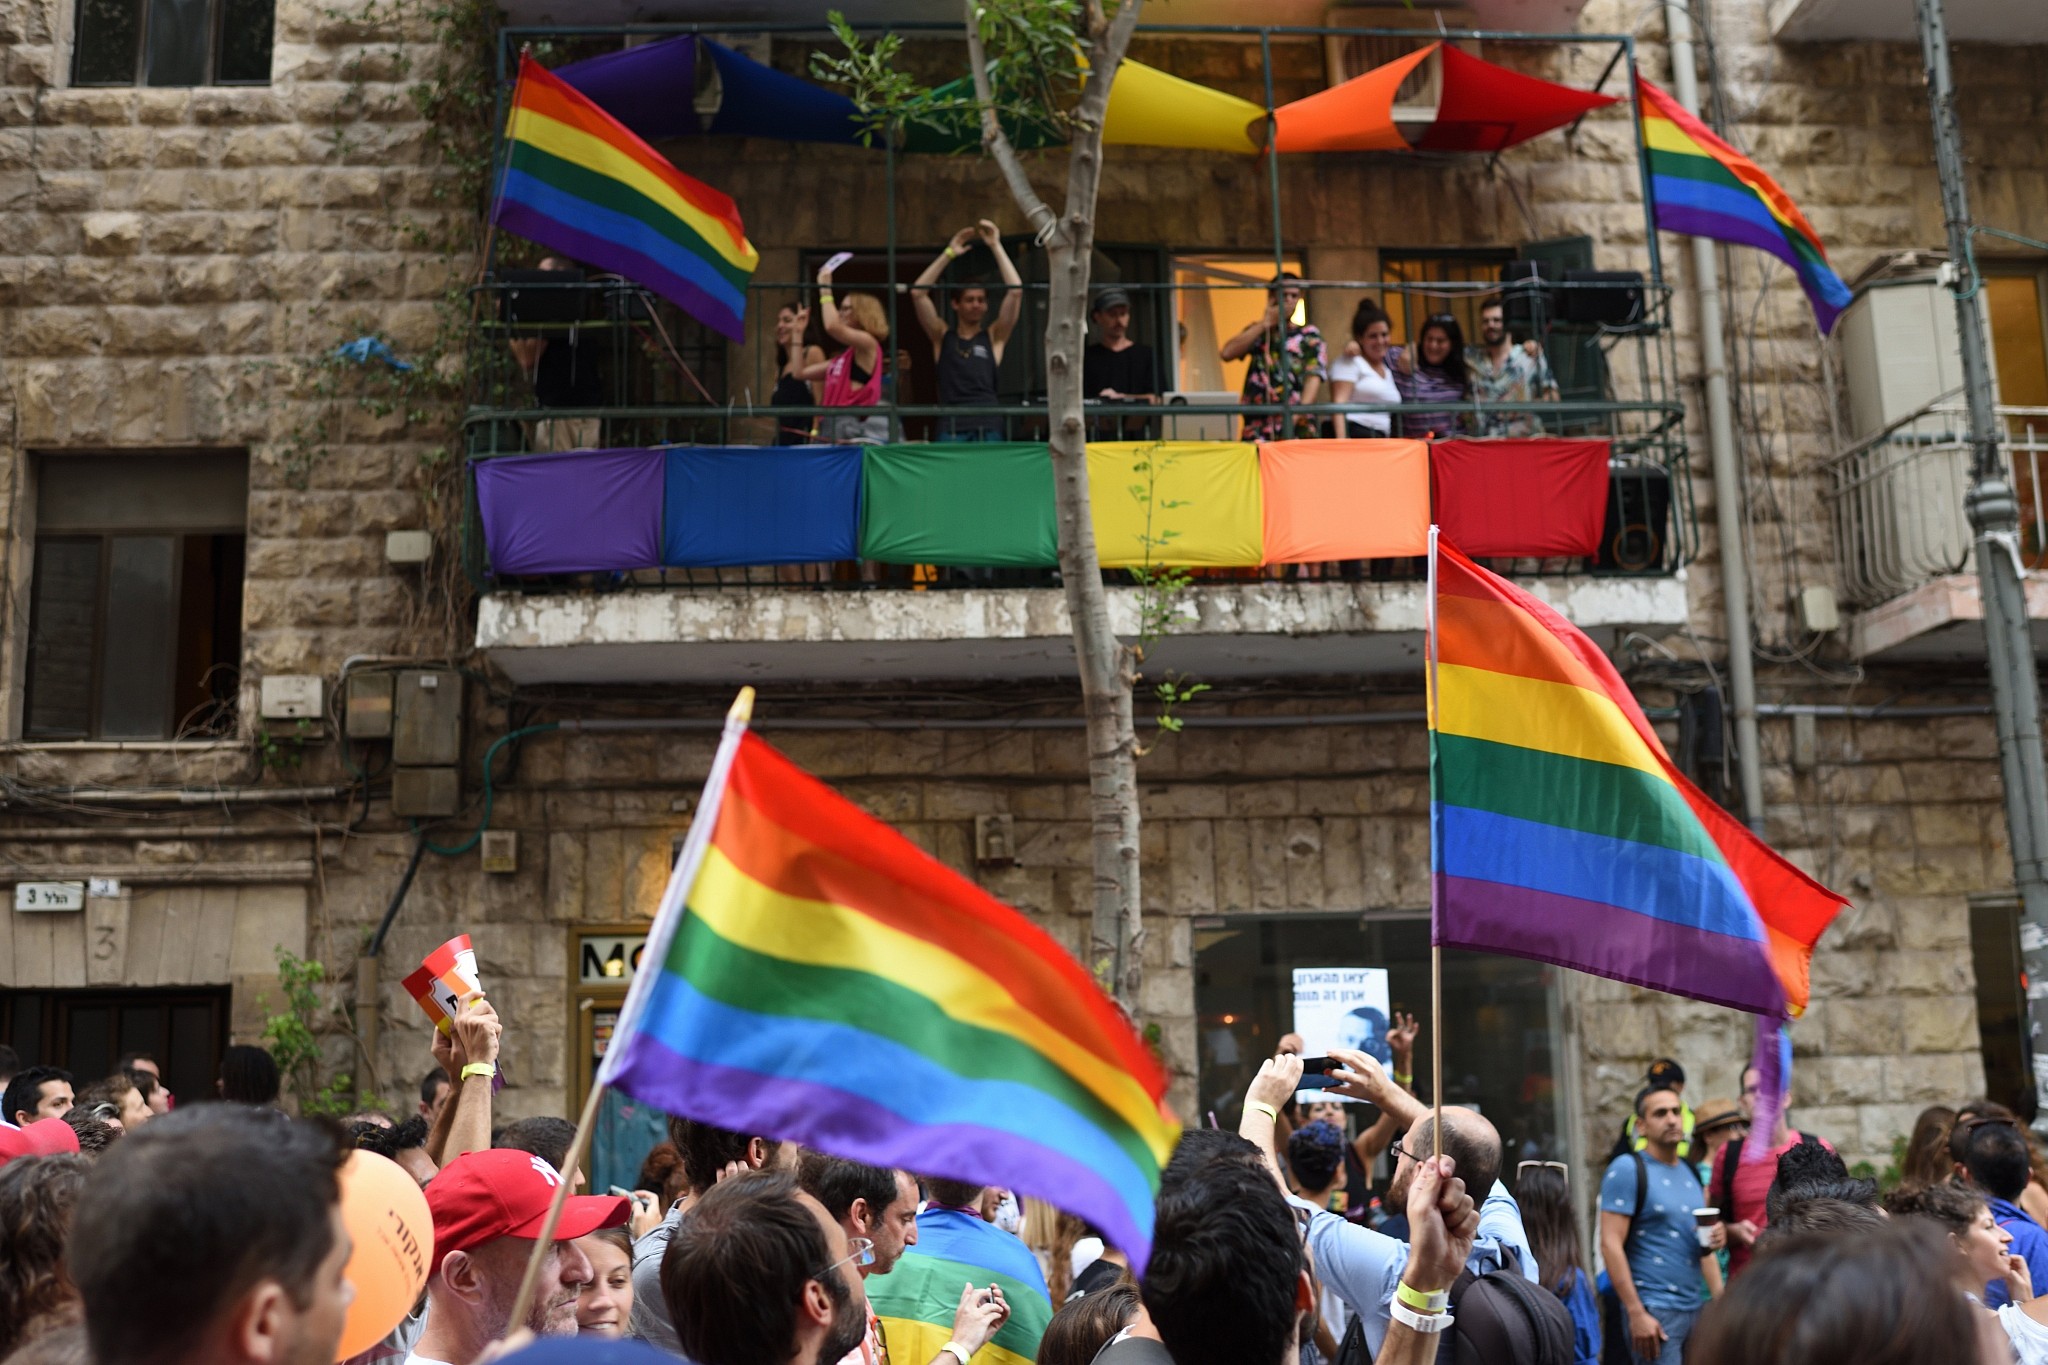 Police arrest 2 on suspicion they planned to disrupt Jerusalem Pride